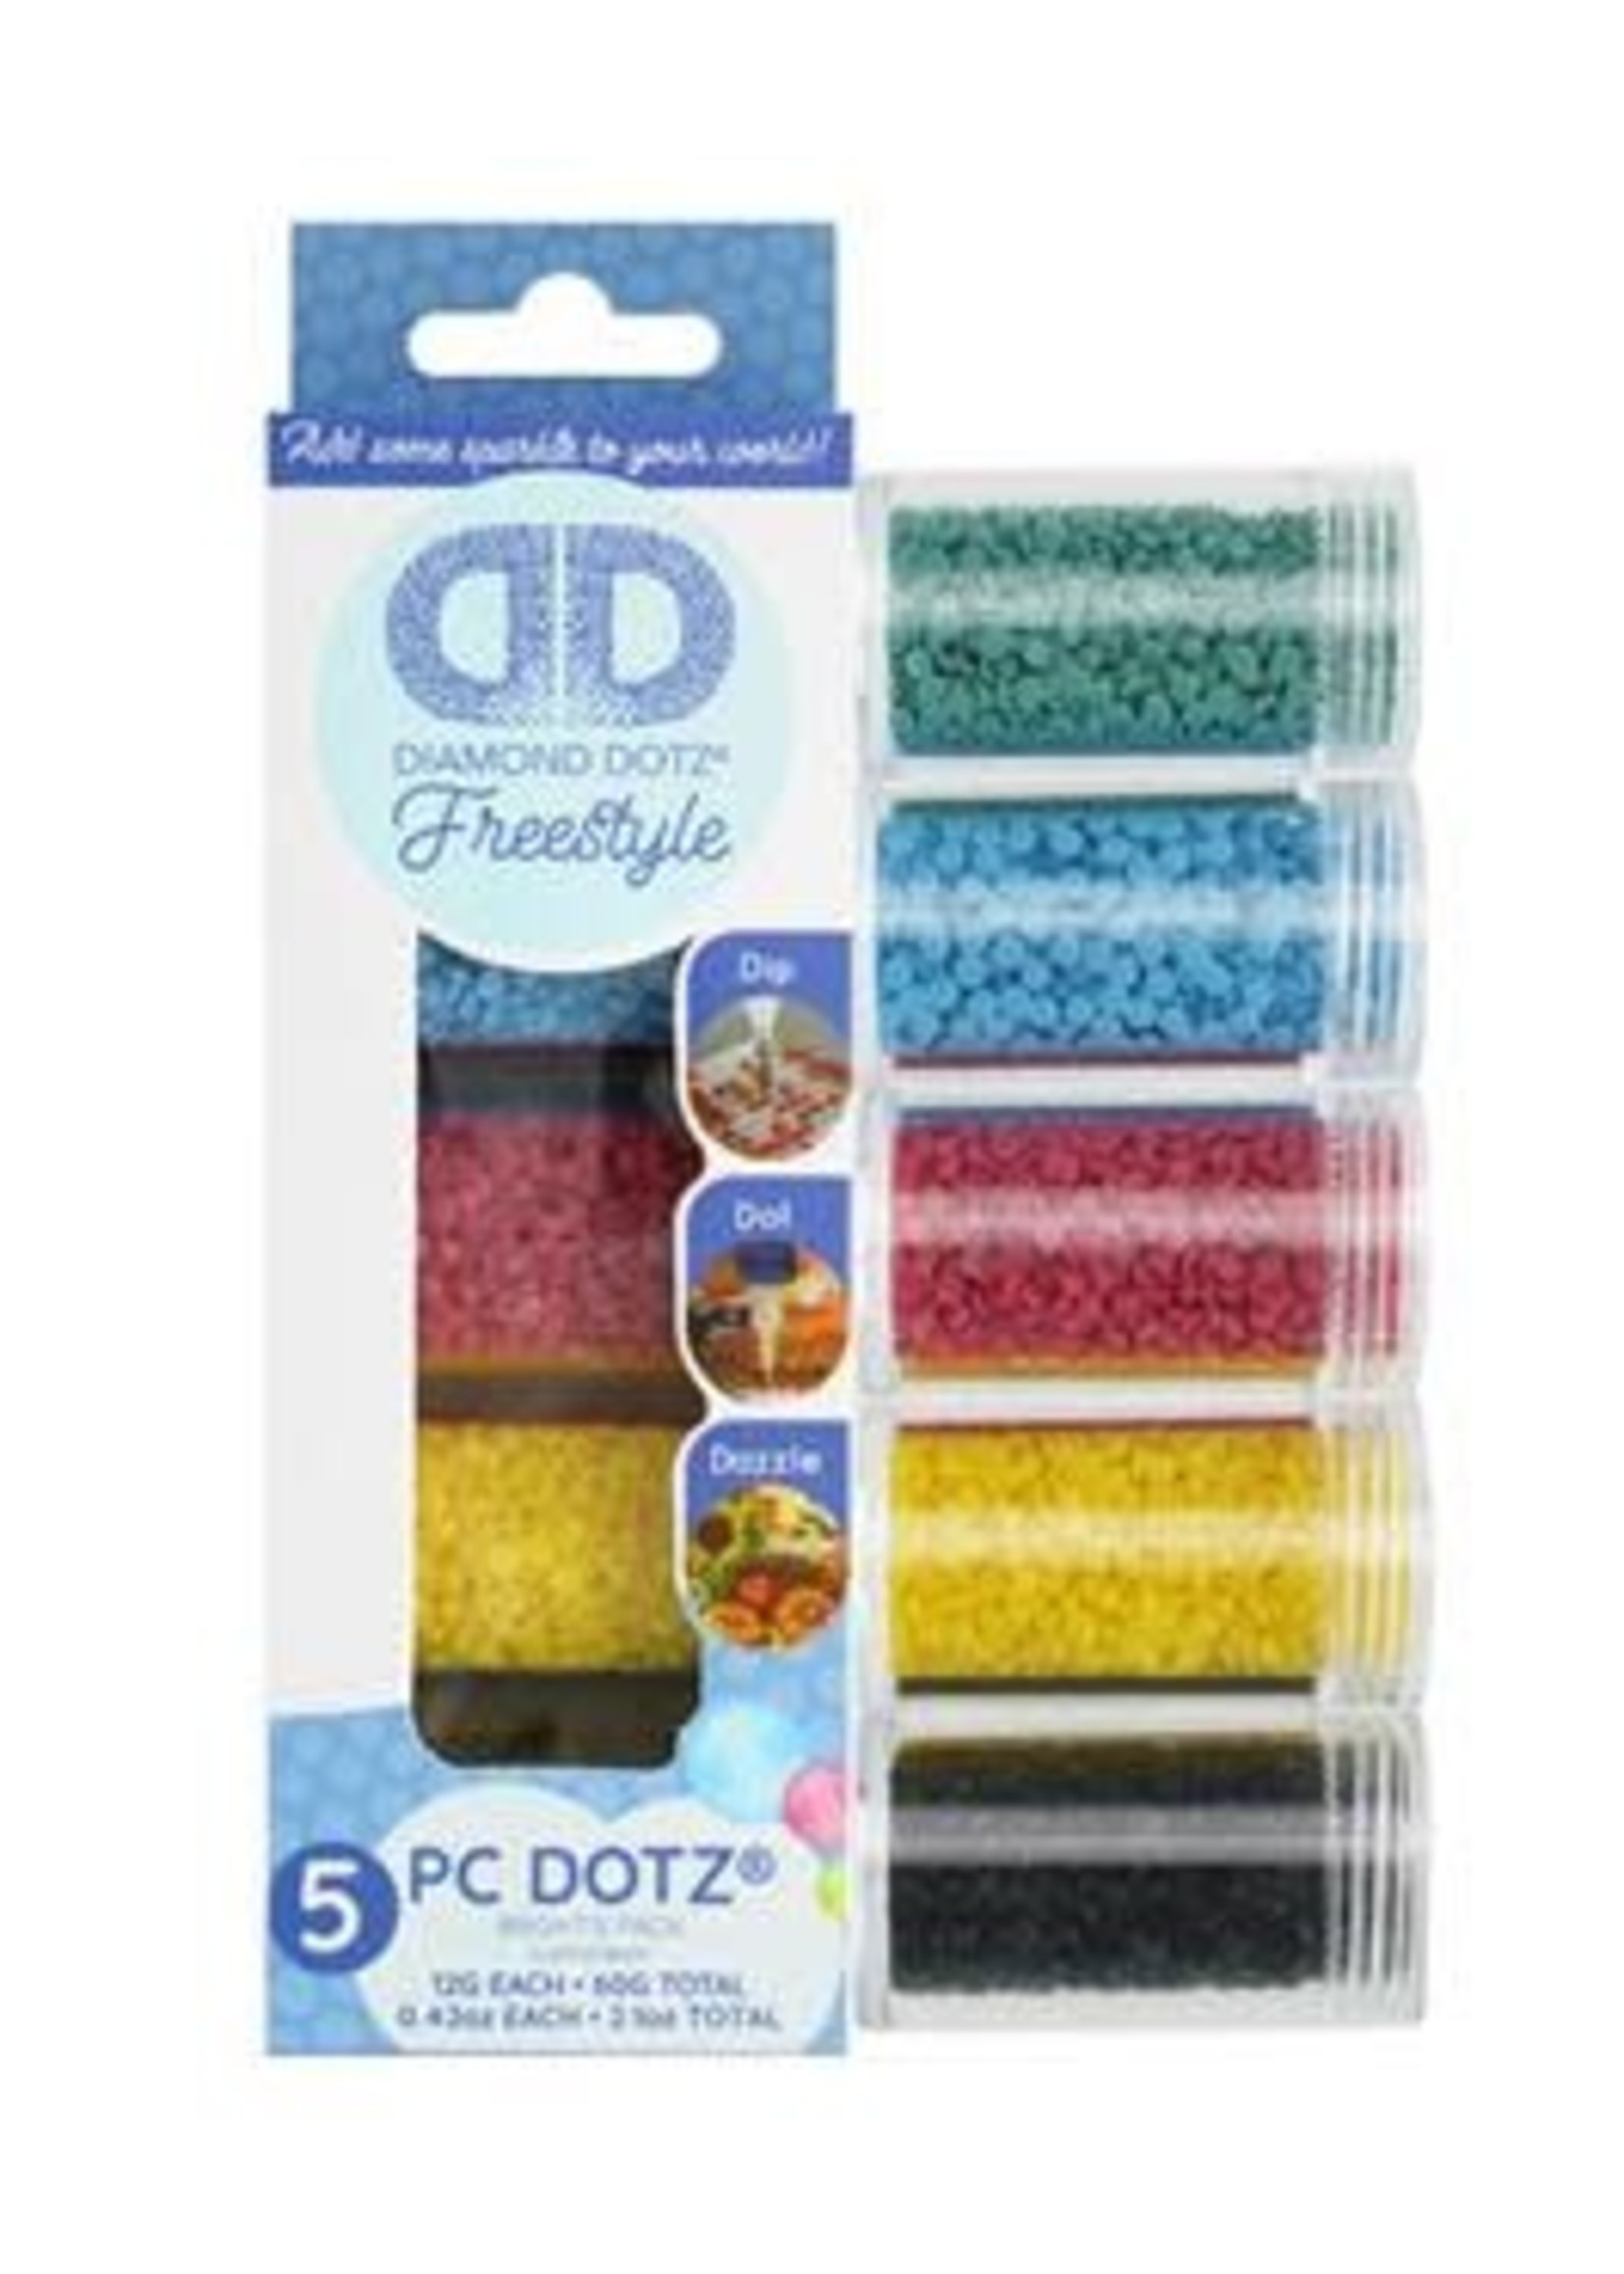 Diamond Dotz Freestyle Gems Sampler Pack 5pc Brights